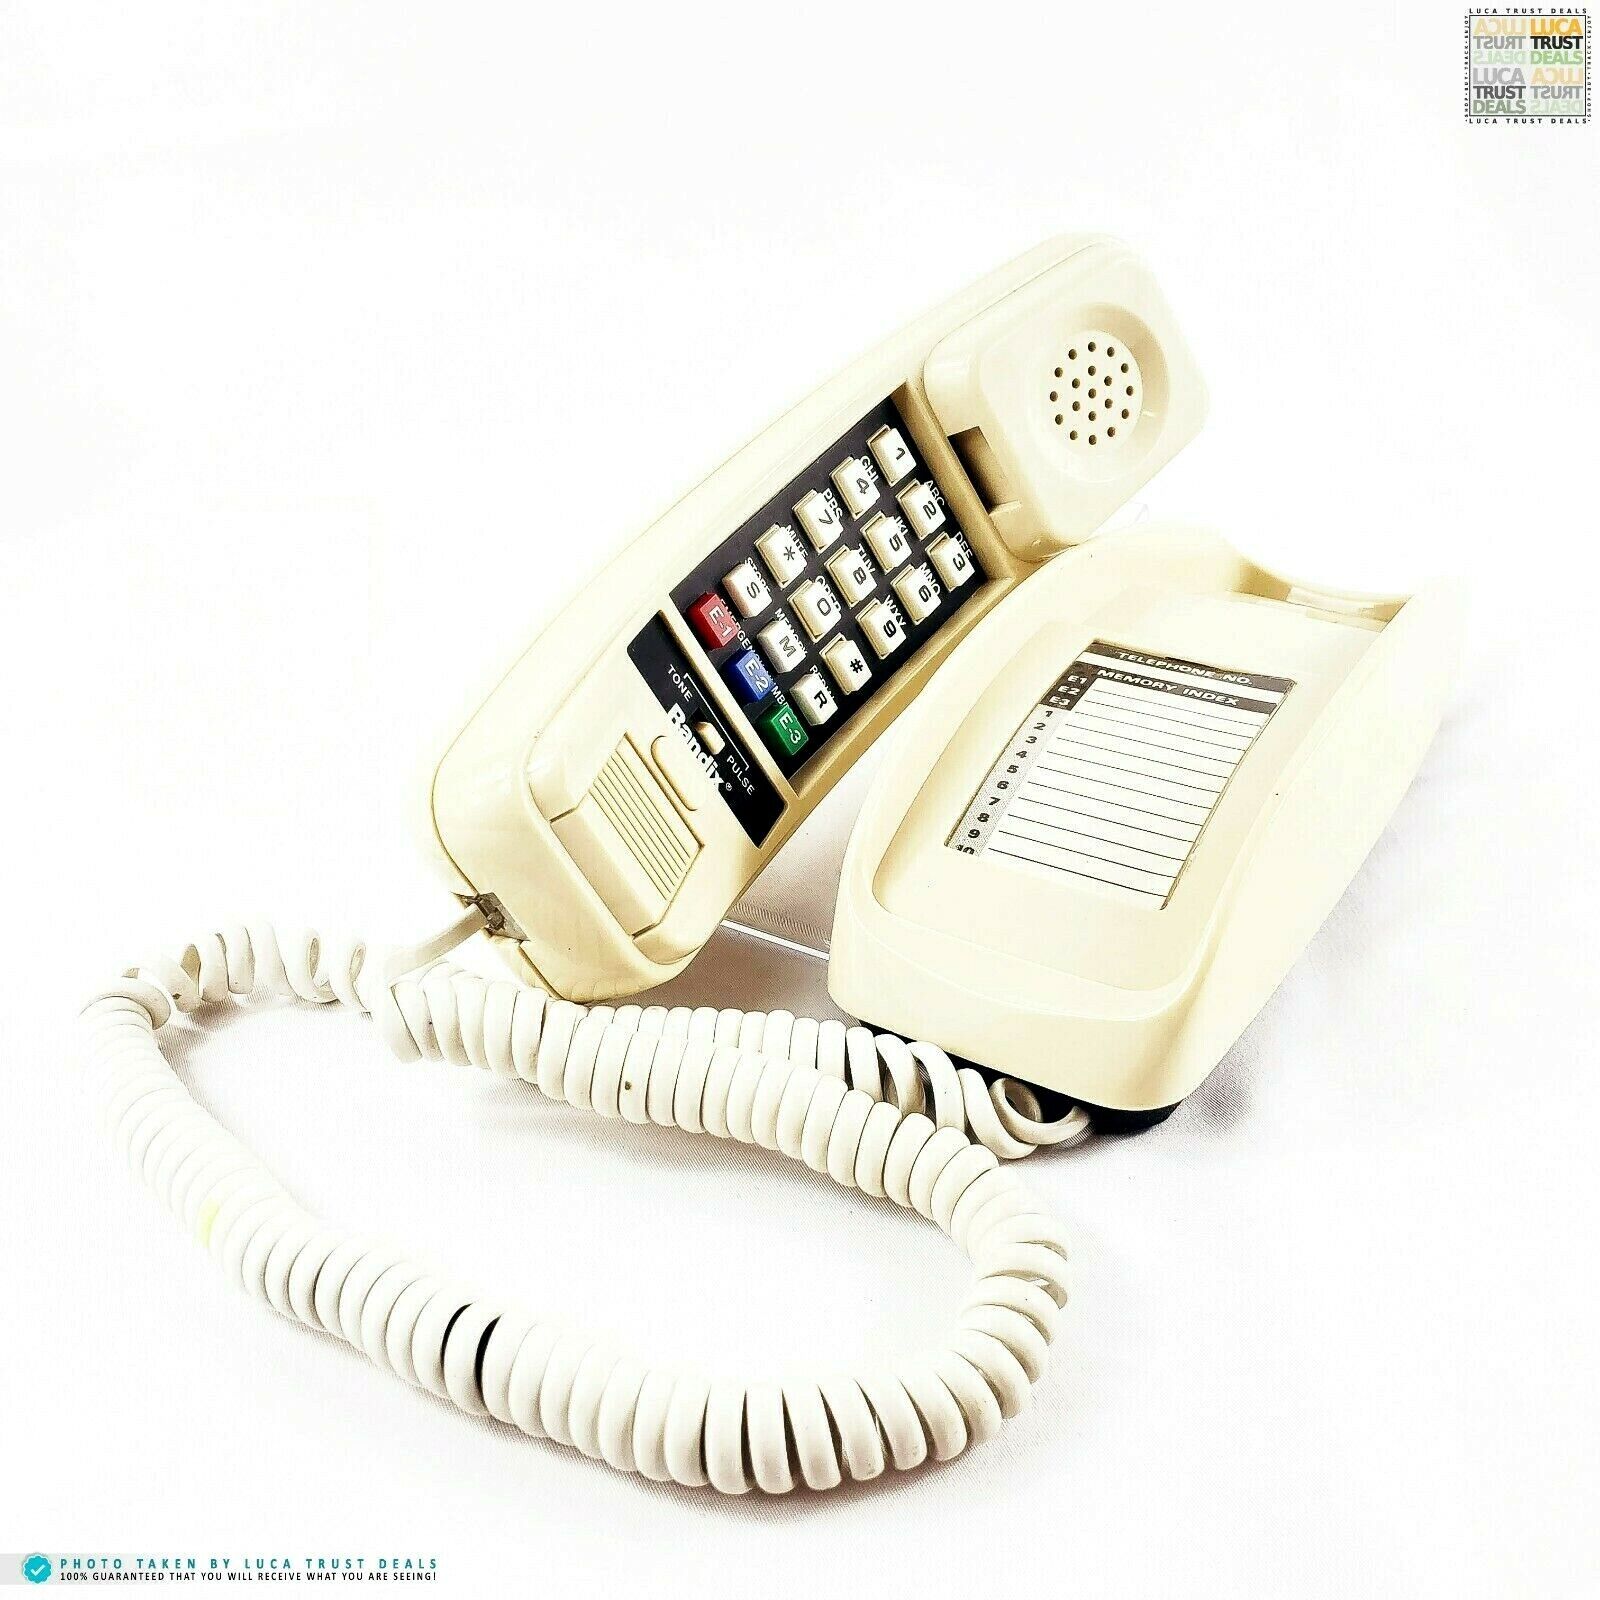 Vintage Randix Telephone TLM-1200 Slimline - Cream Colored - 1970’s